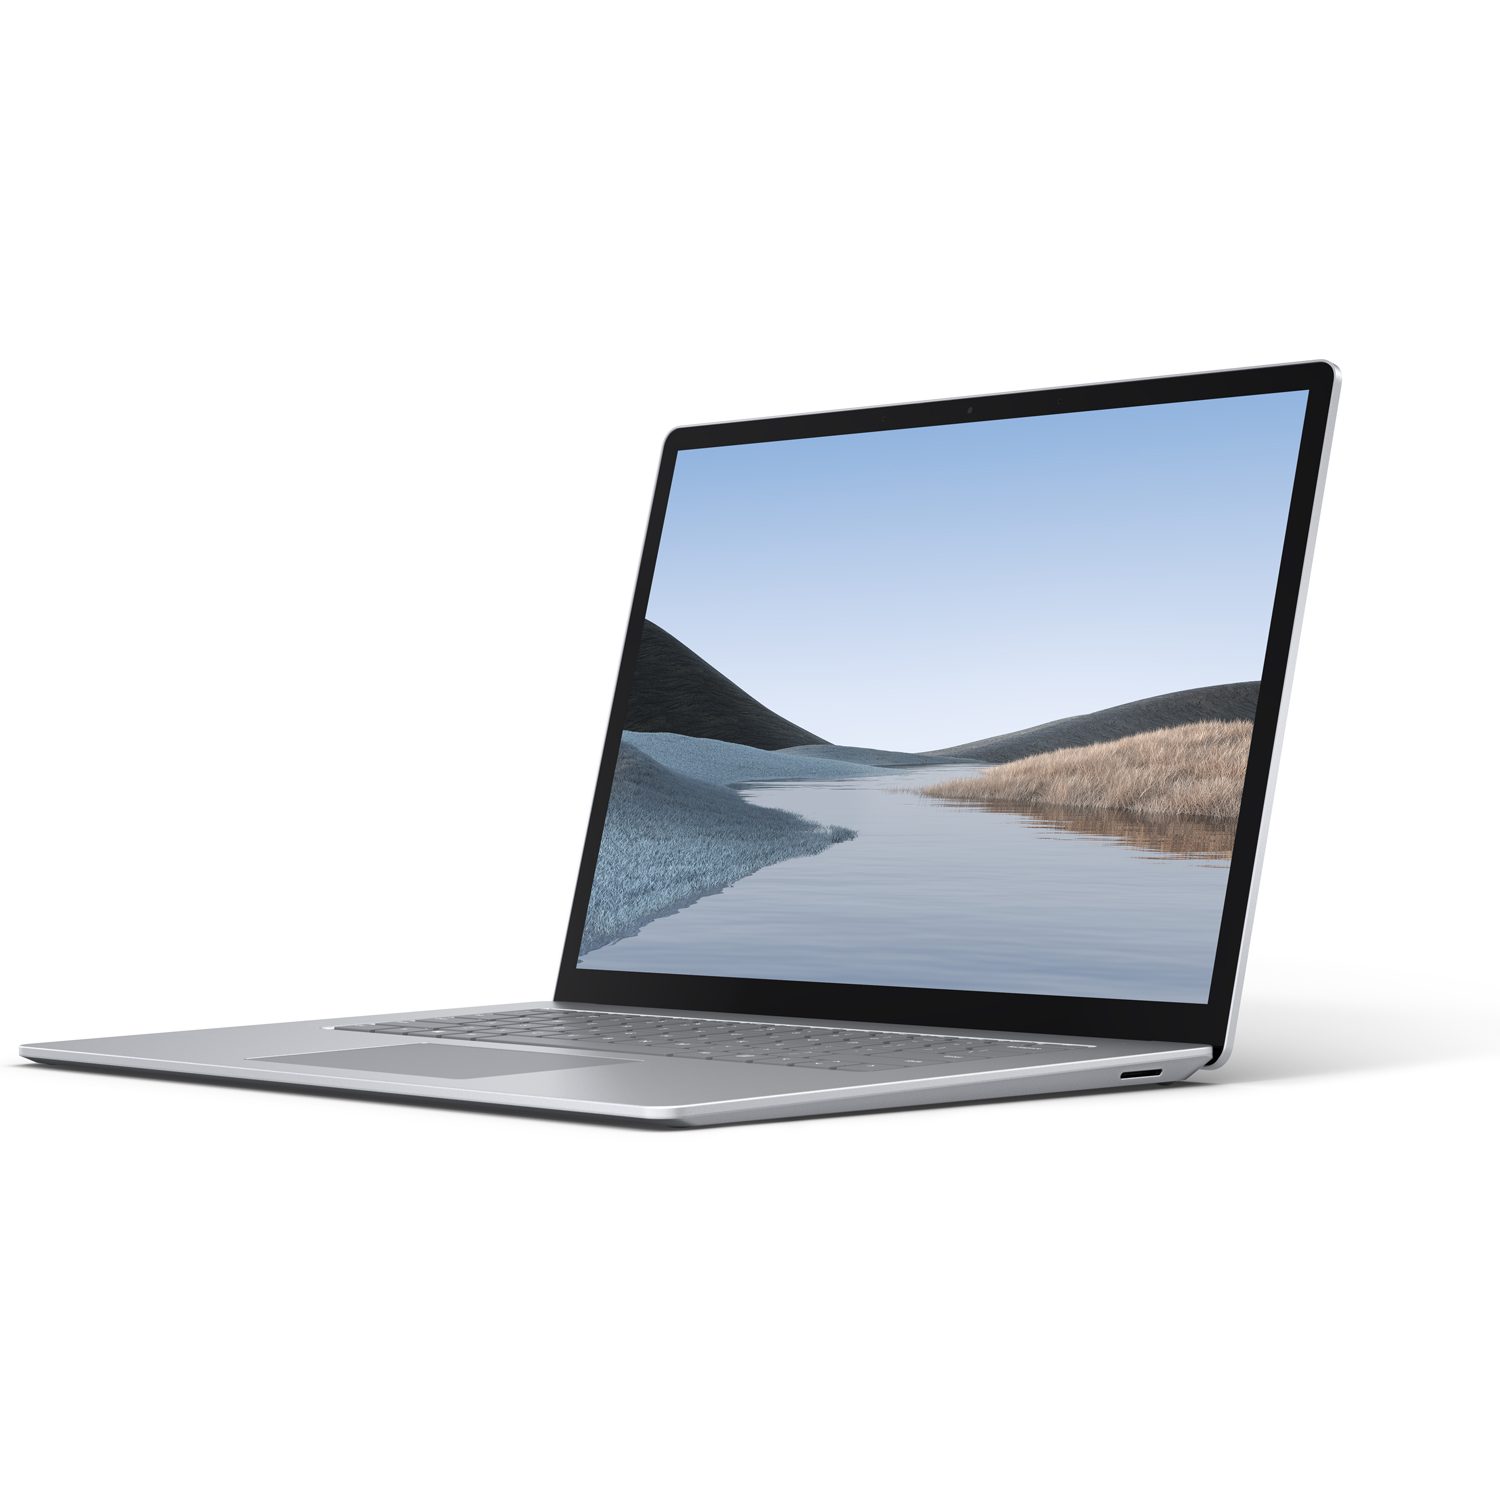 Microsoft VGZ-00001 Surface Laptop 3 15 Touch AMD Ryzen 5 3580U 8GB 256GB, Platinum